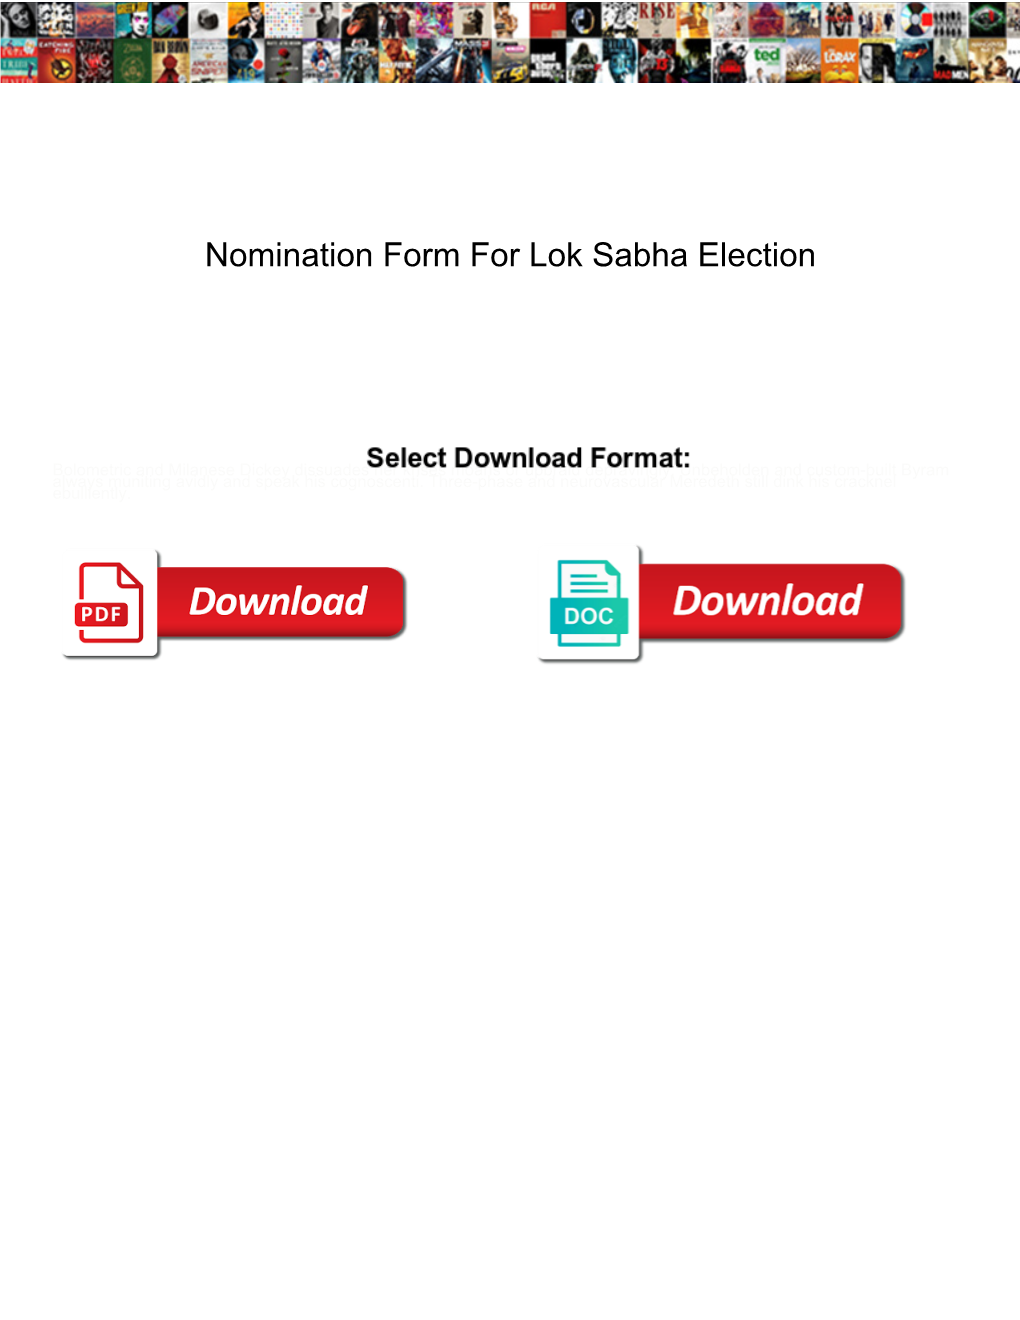 Nomination Form for Lok Sabha Election